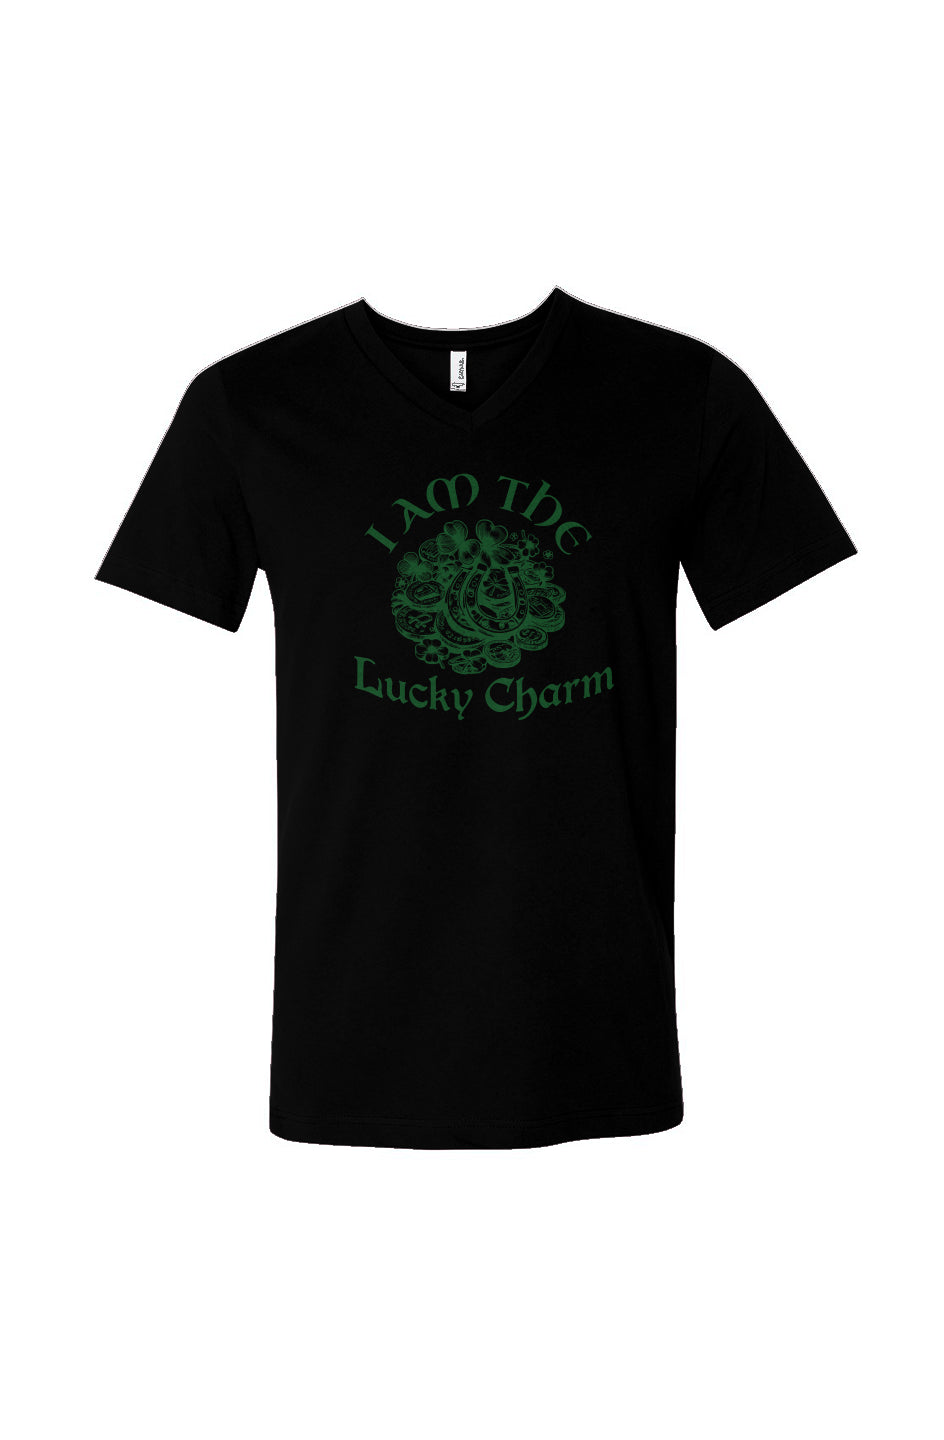 "I am the Lucky Charm" V-neck